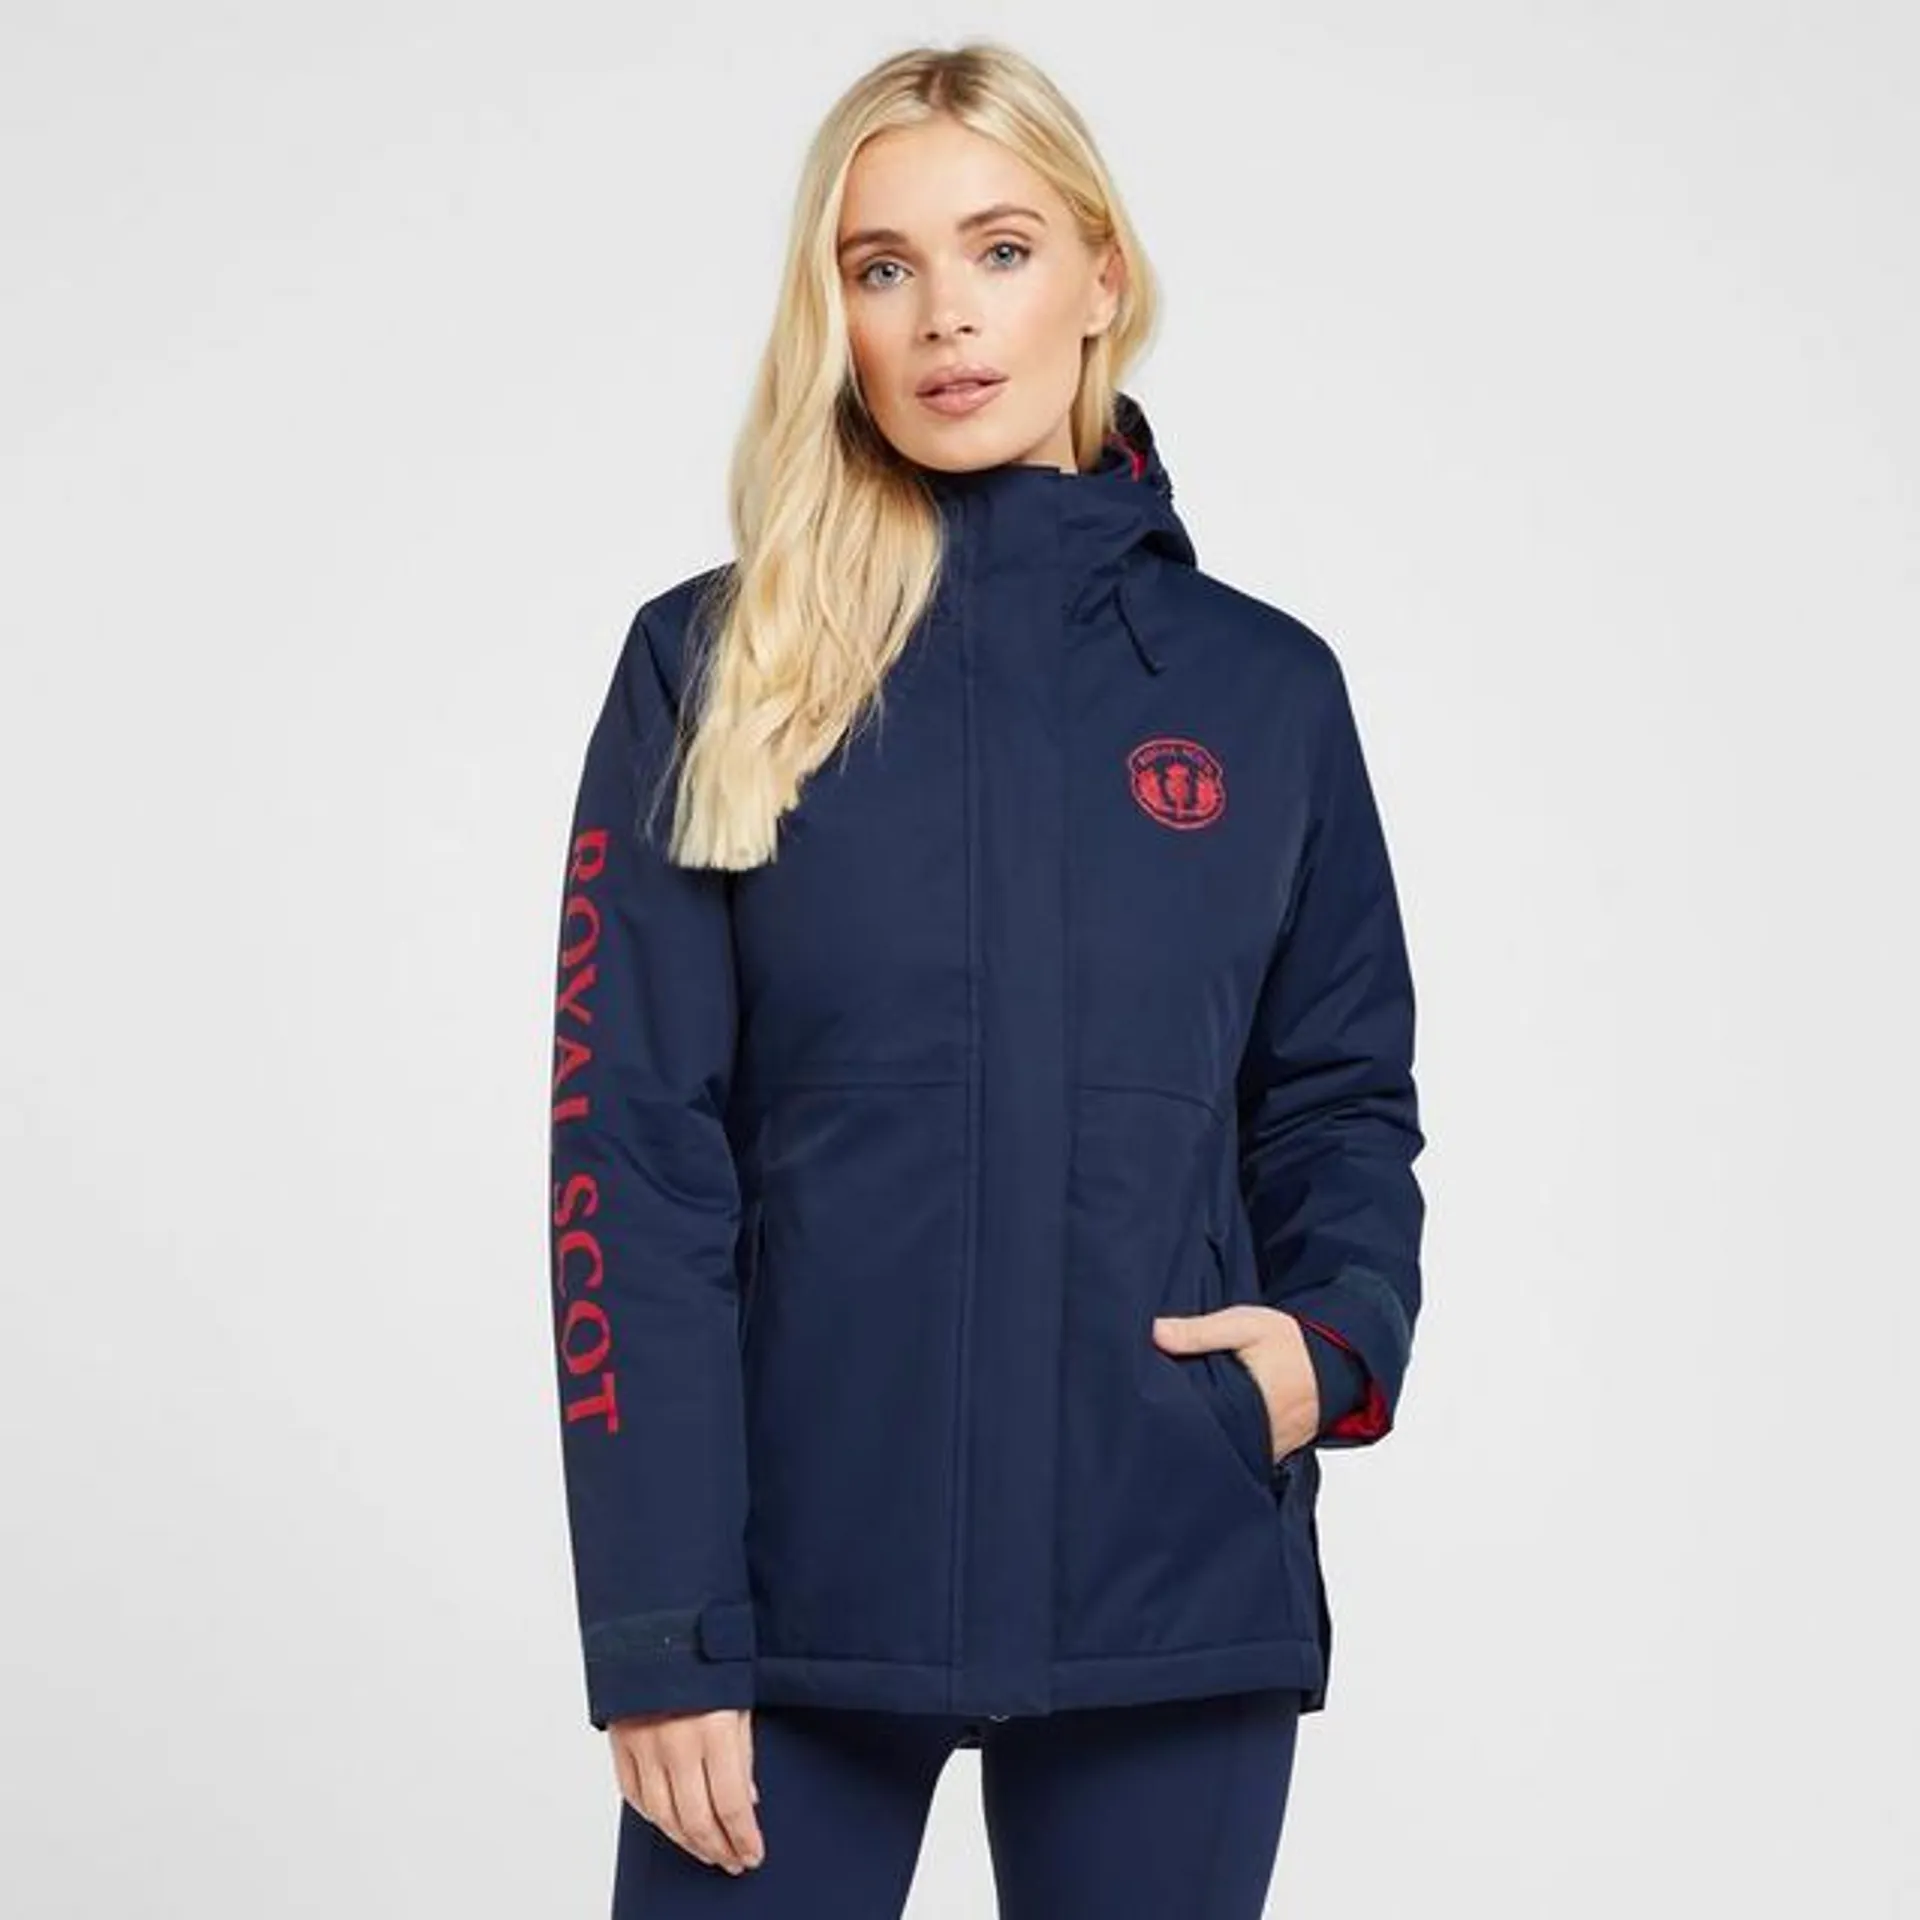 Women’s Waterproof Insulated Jacket